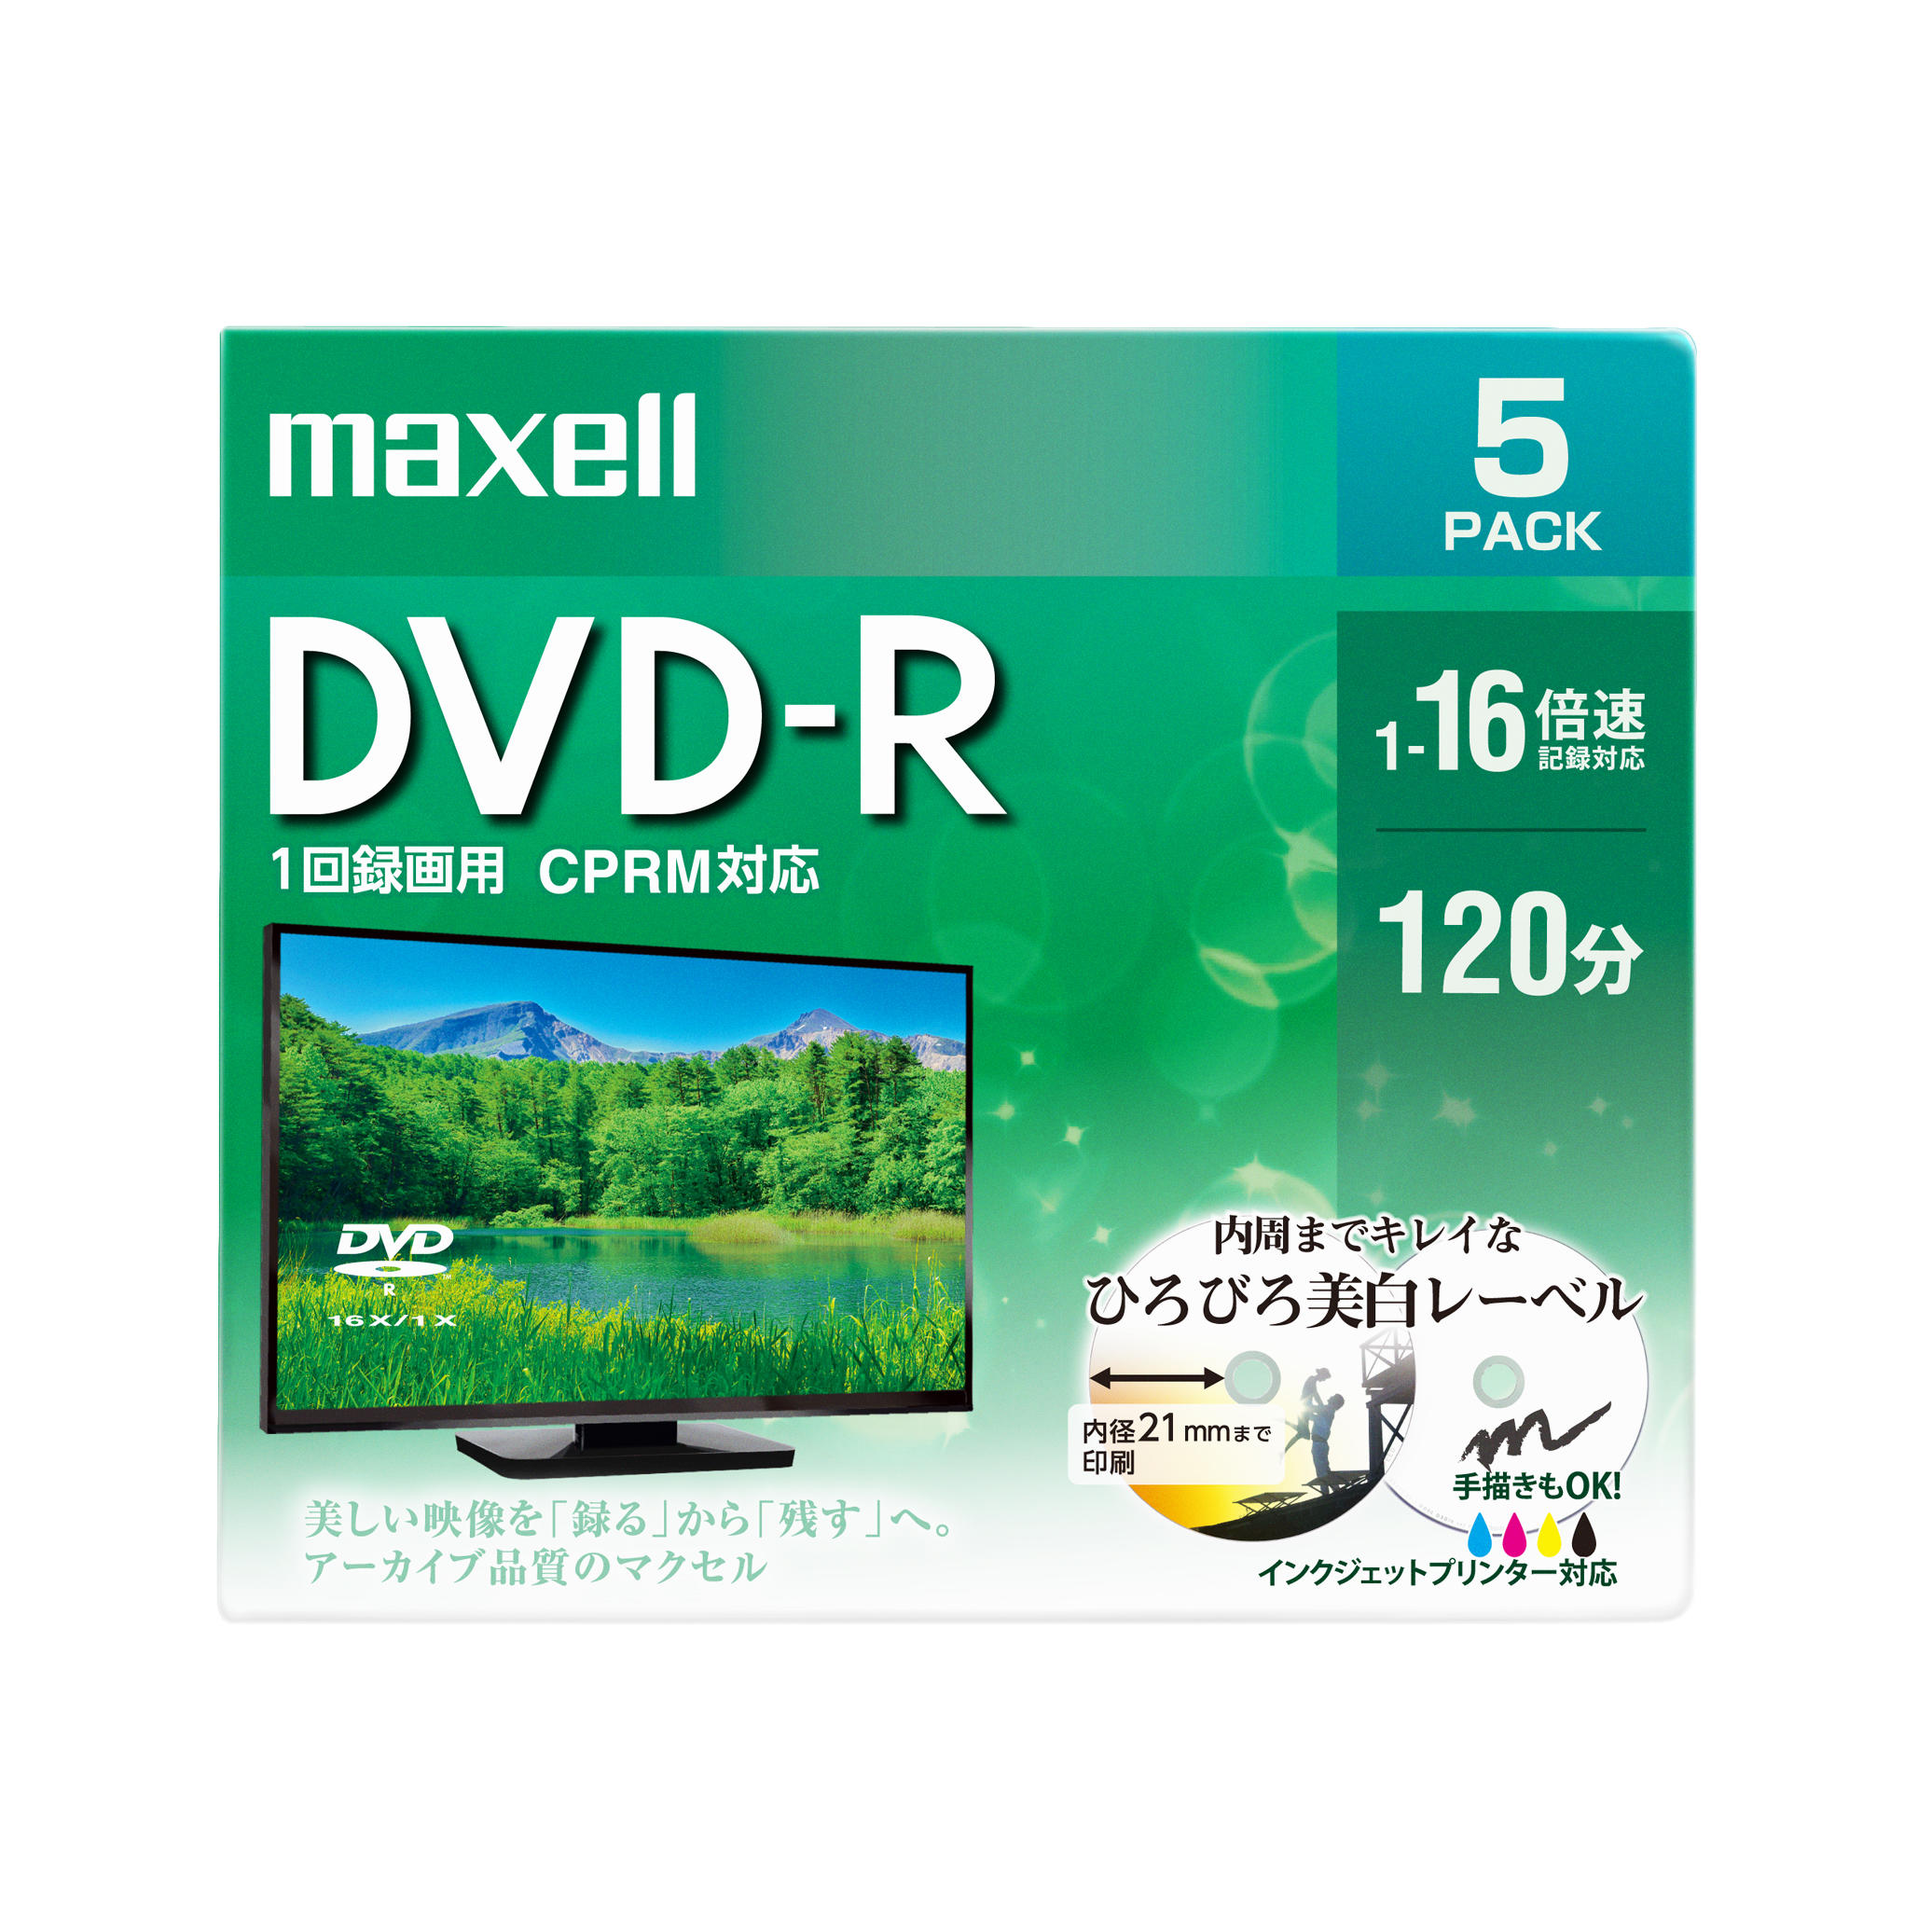 DVD-R （1～16倍速 CPRM対応）ひろびろワイド(美白)レーベル 